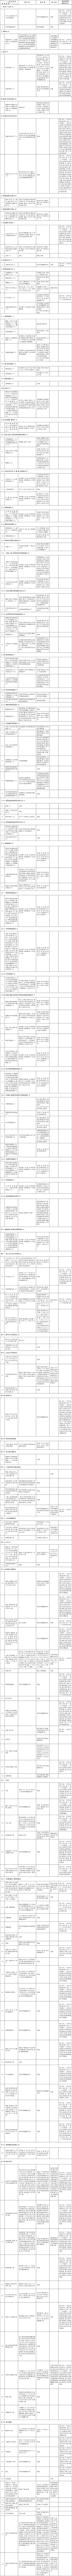 KU体育金太阳中华人民共和国生态环境部令（第16号）(图1)